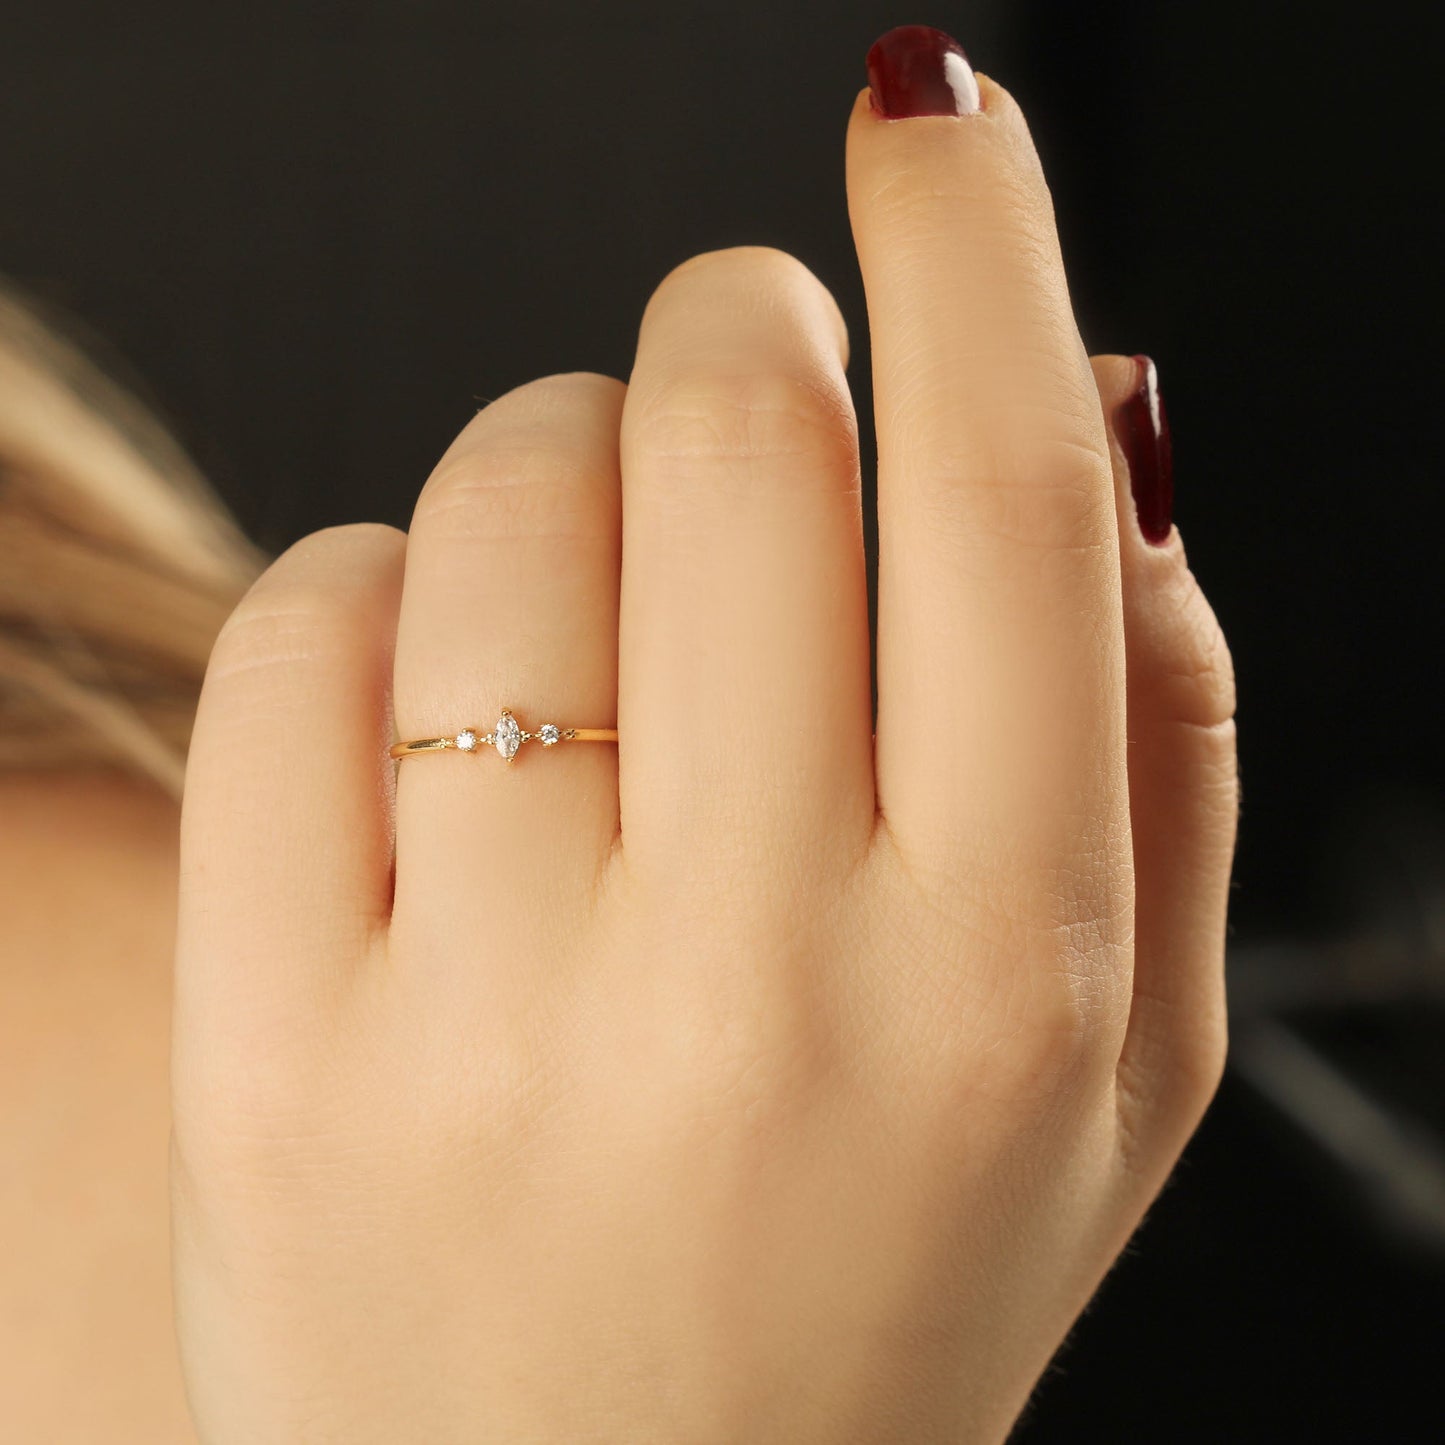 14K Gold Minimalist Marquise Diamond Ring - 2S111